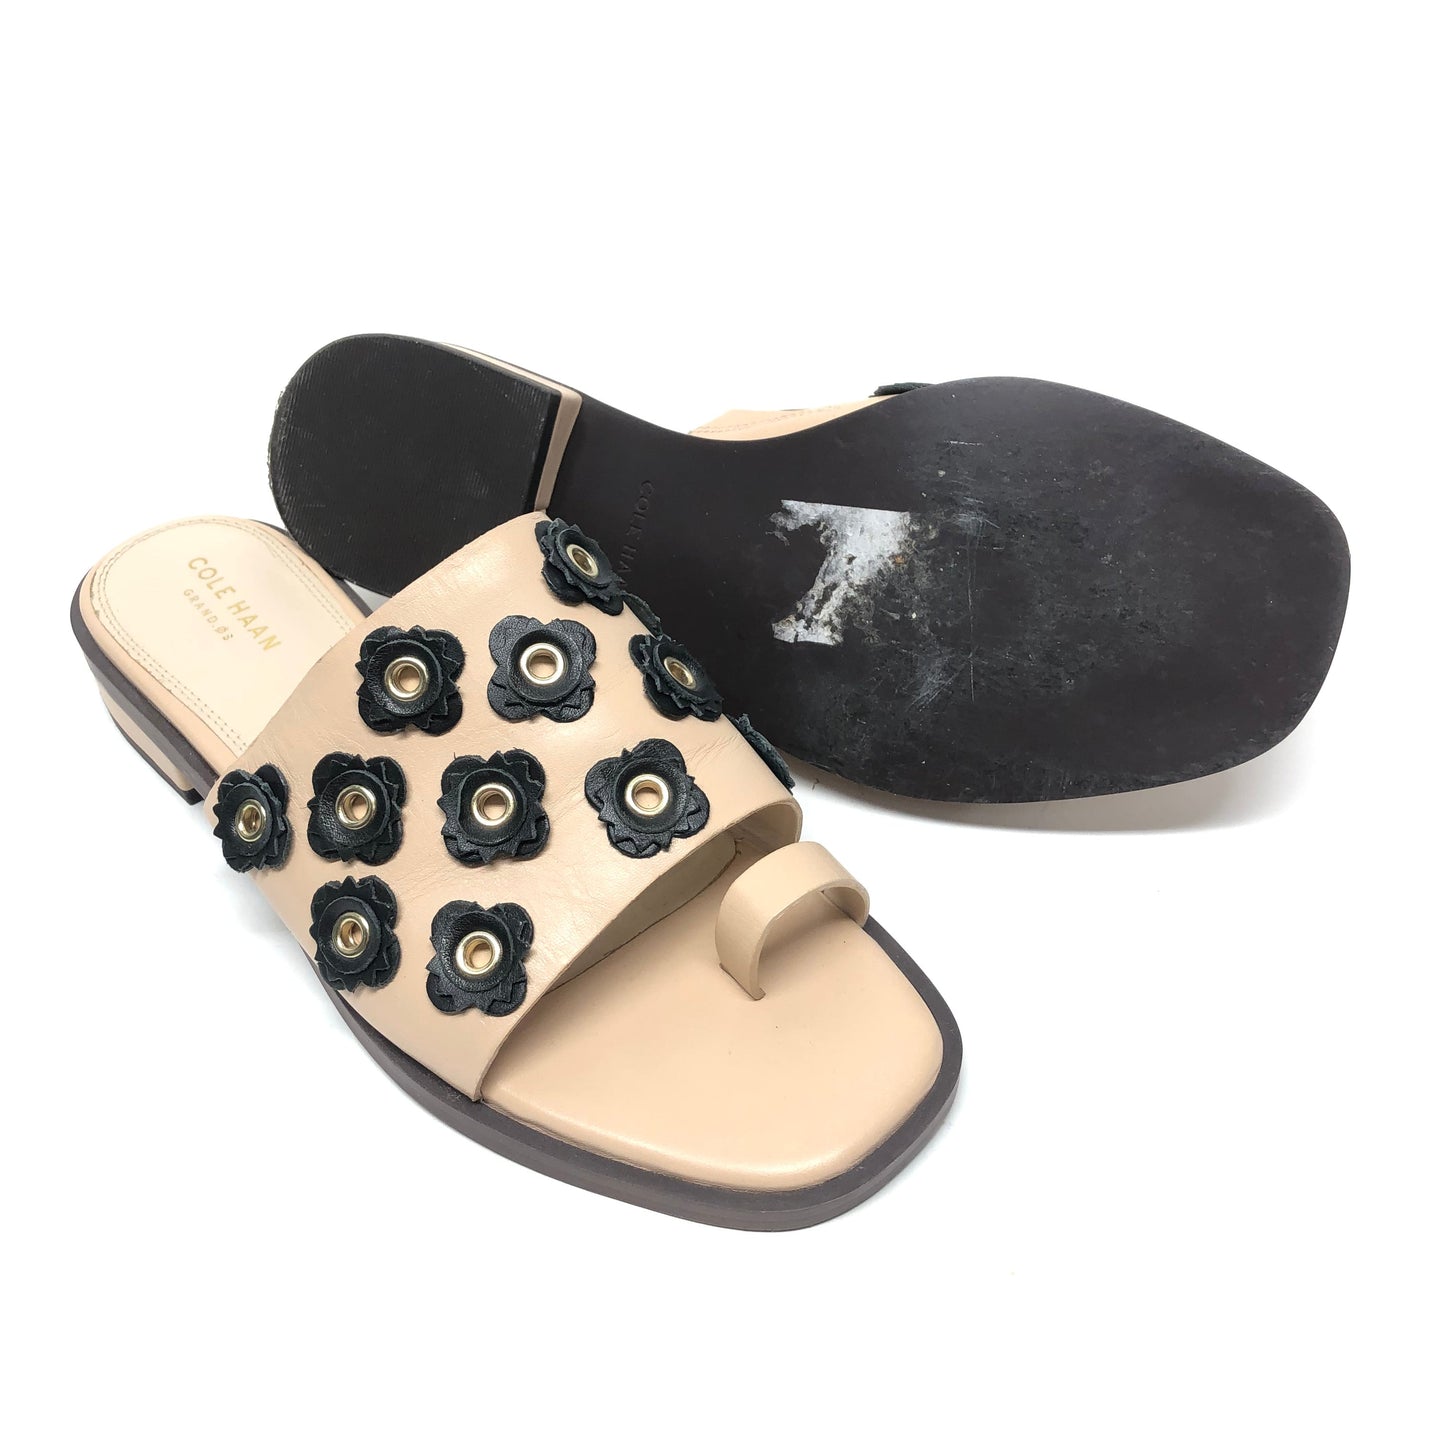 Black & Tan Sandals Flats Cole-haan, Size 8